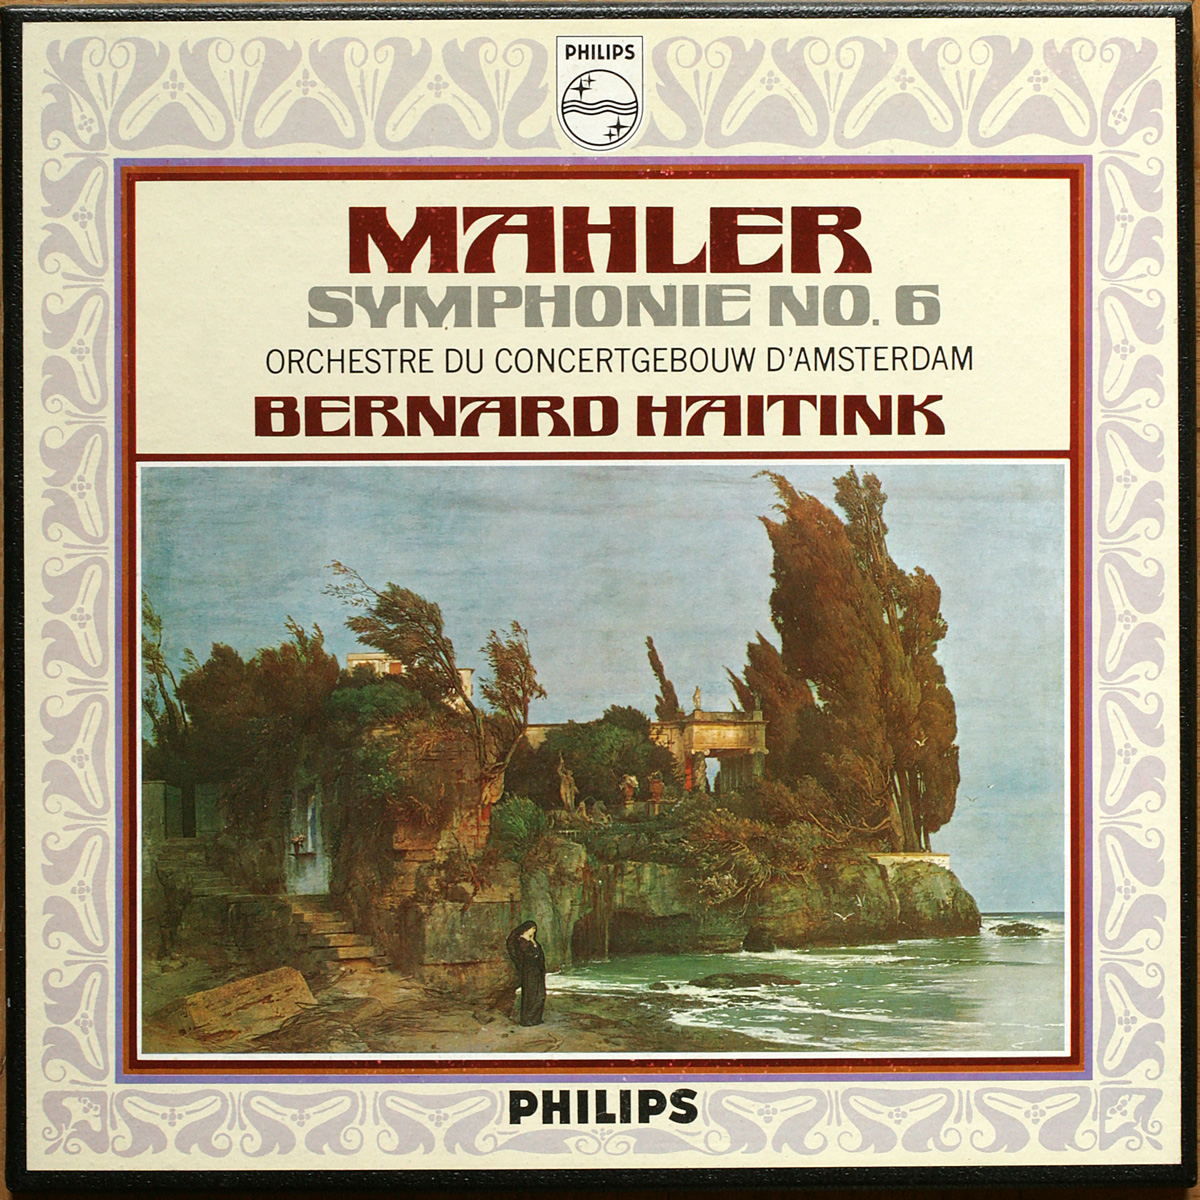 Mahler • Symphonie n° 6 "Tragique" • Philips 839.797/98 LY • Concertgebouw-Orchester Amsterdam • Bernard Haitink